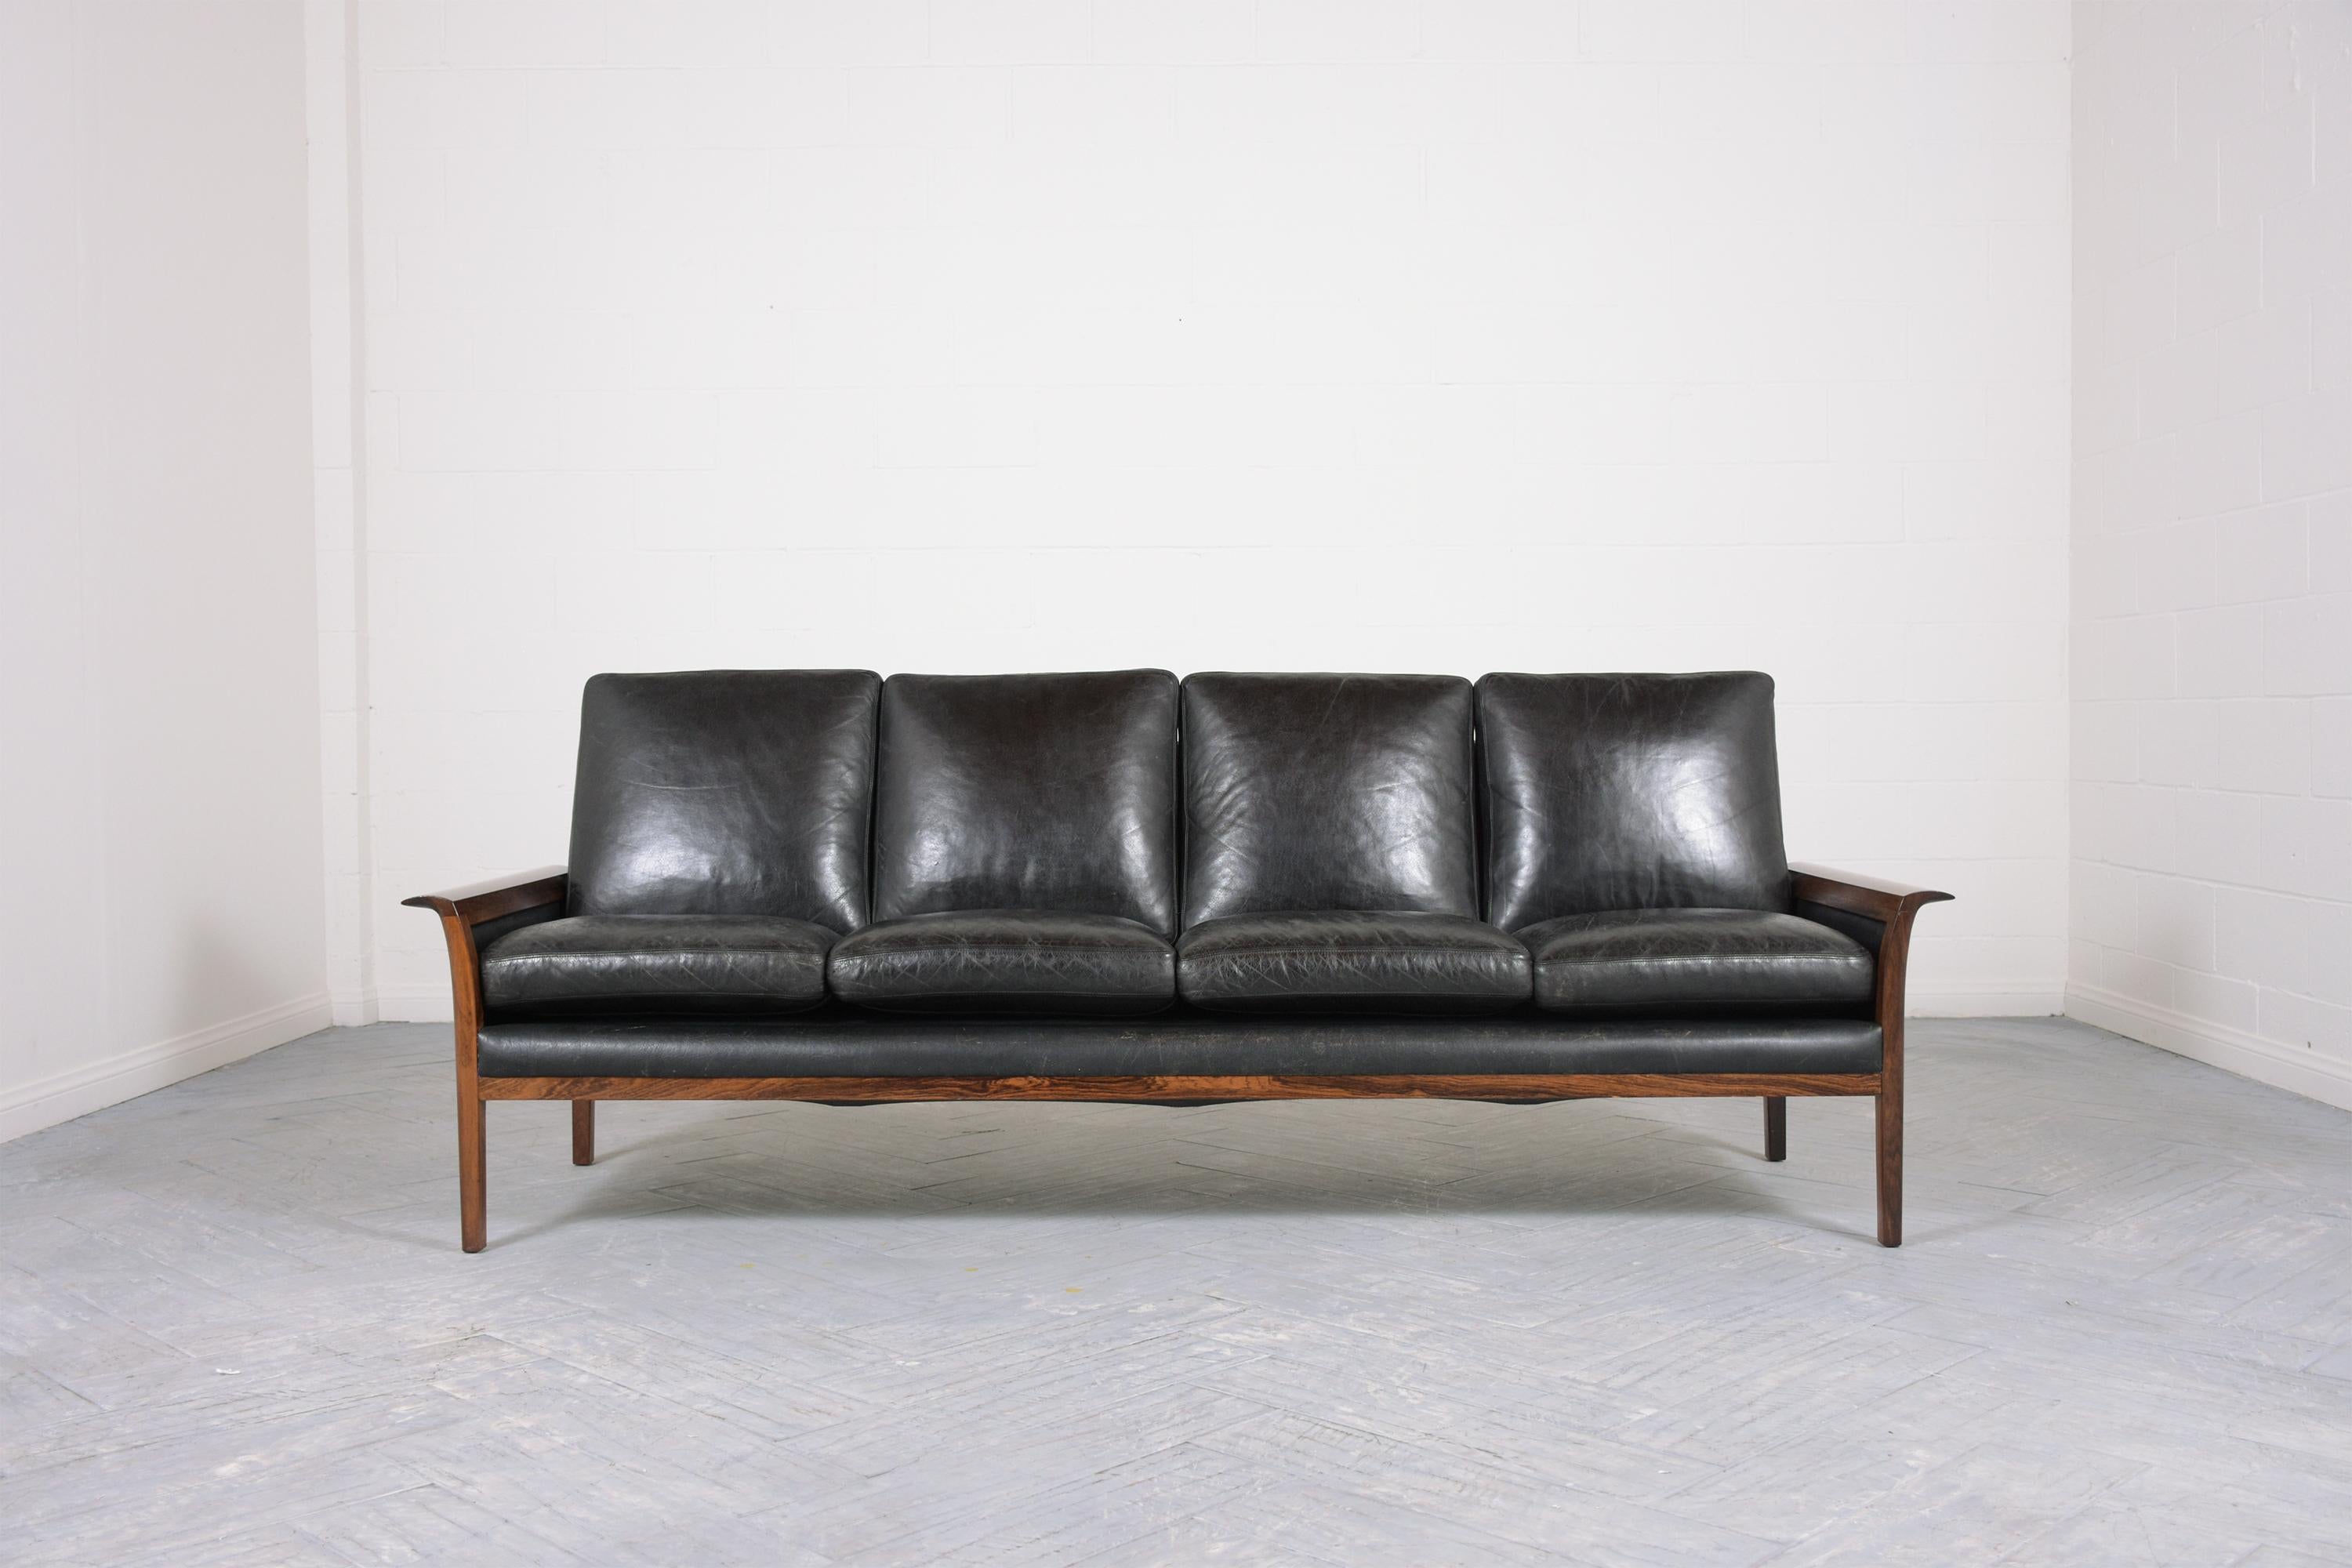 Stained Danish Modern Sofa by Illum Wikkelsø